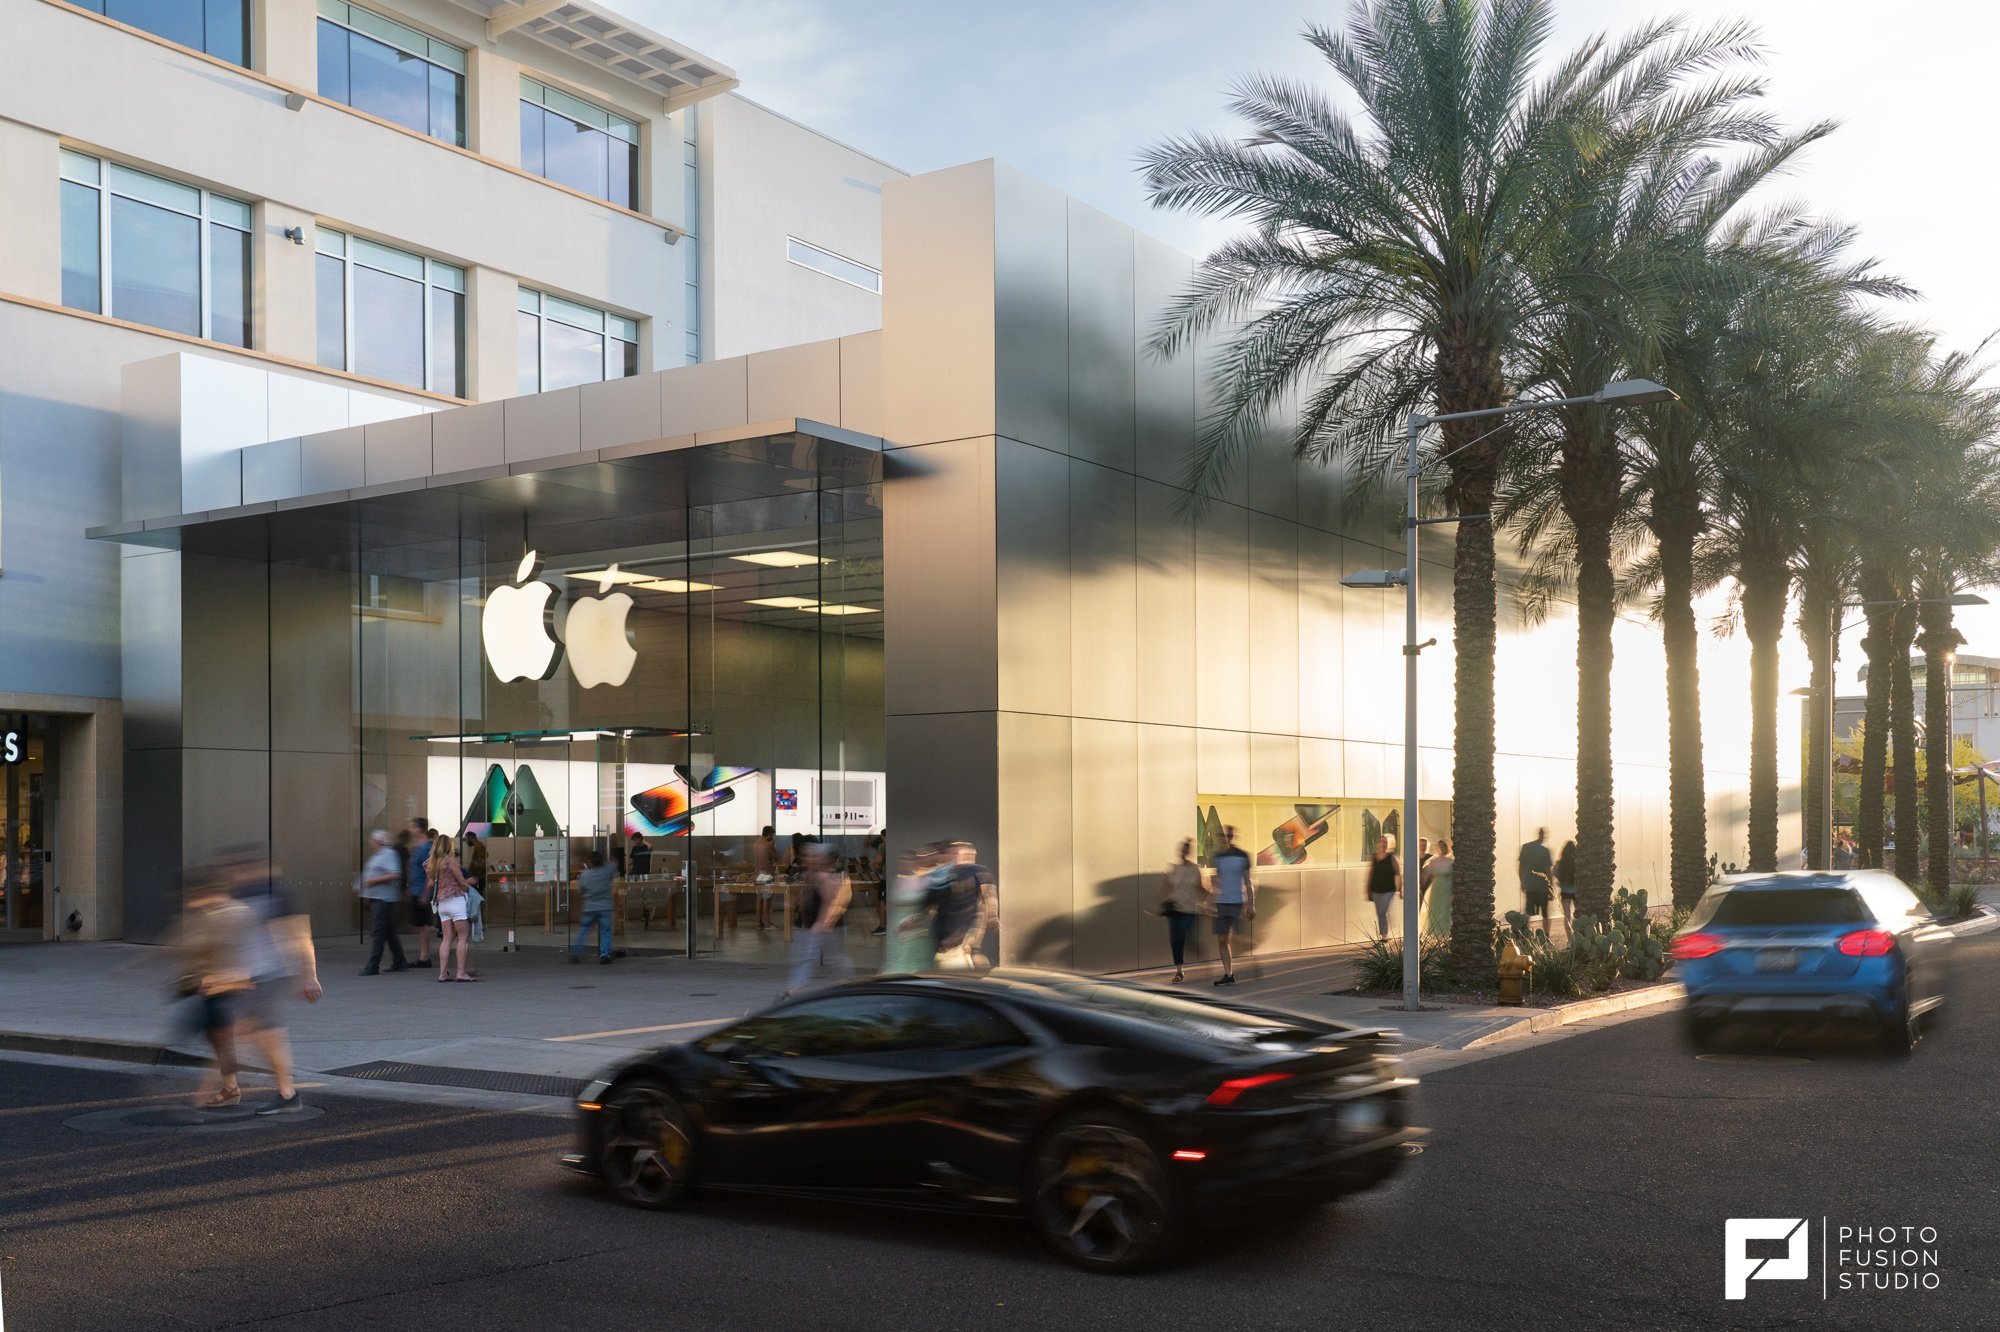 Apple Store at Scottsdale Quarter - Photo Fusion Studio